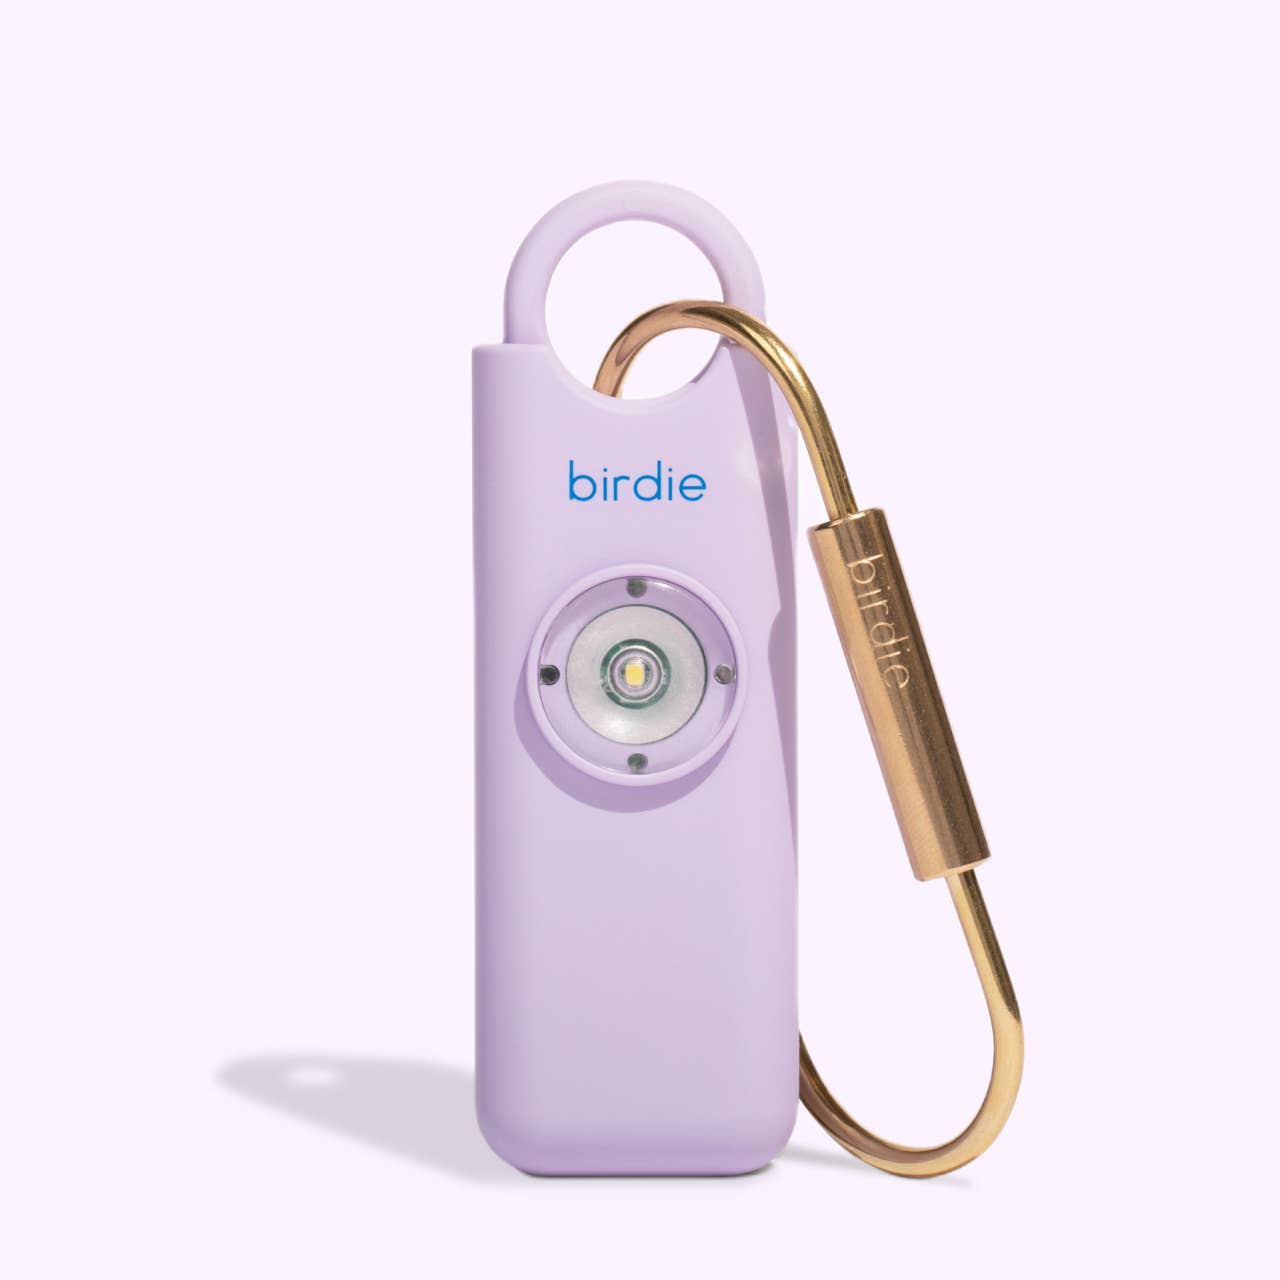 She's Birdie Personal Safety Alarm: Single / Metallic Purple